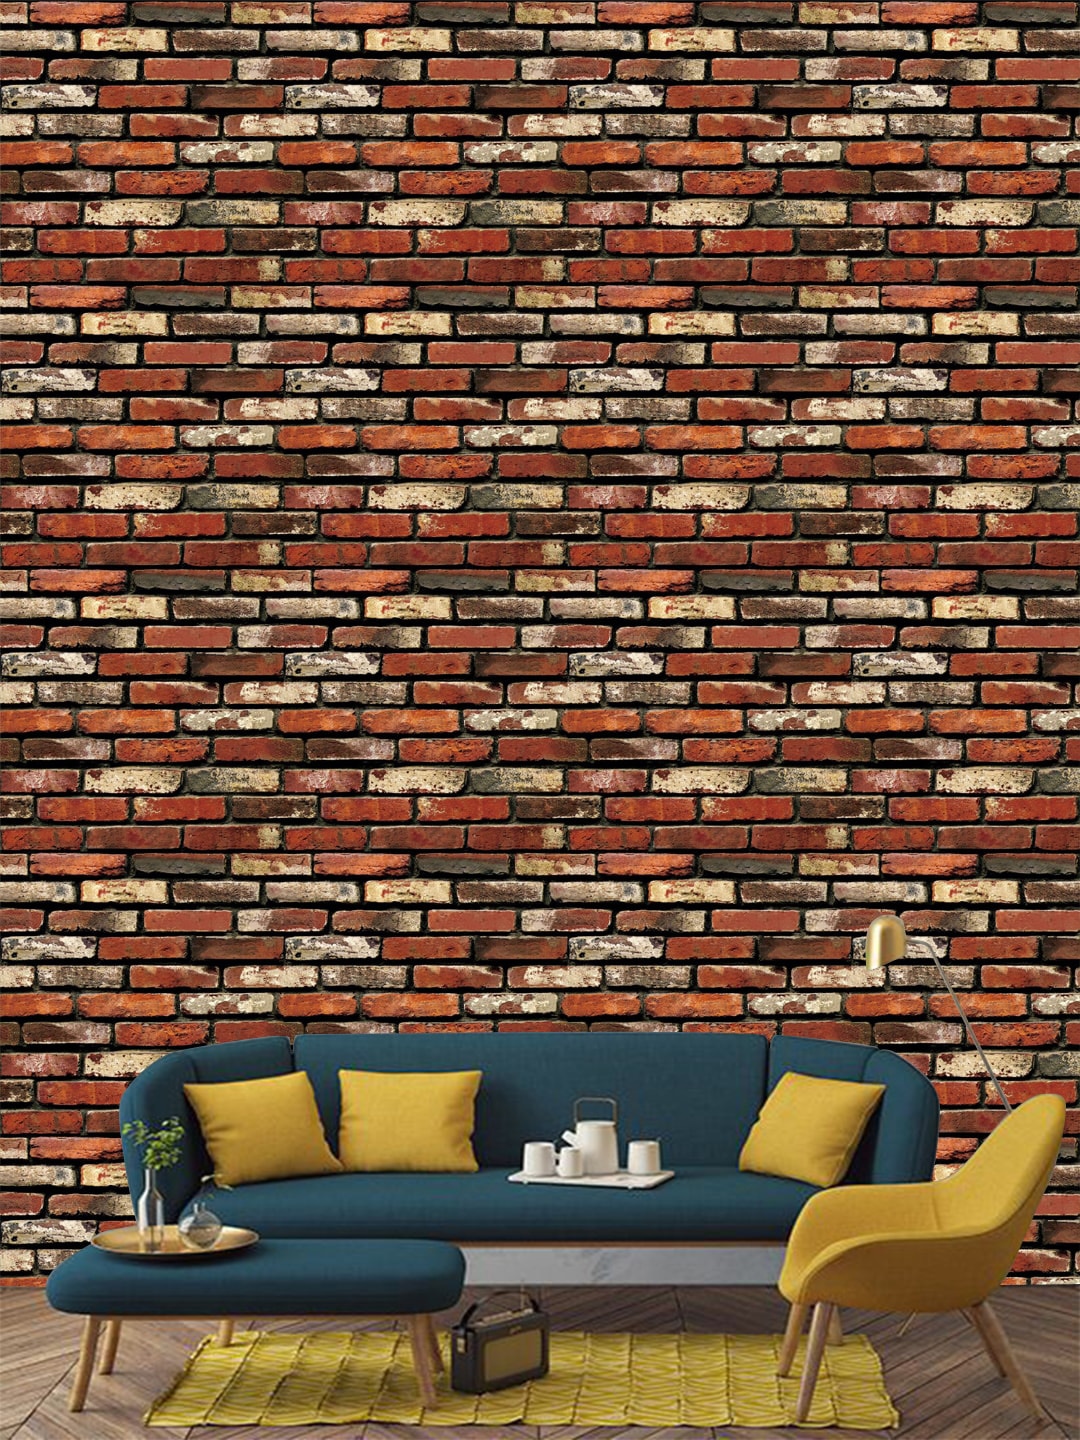 

Jaamso Royals Multicoloured Brick Self Adhesive Wallpaper, Multi